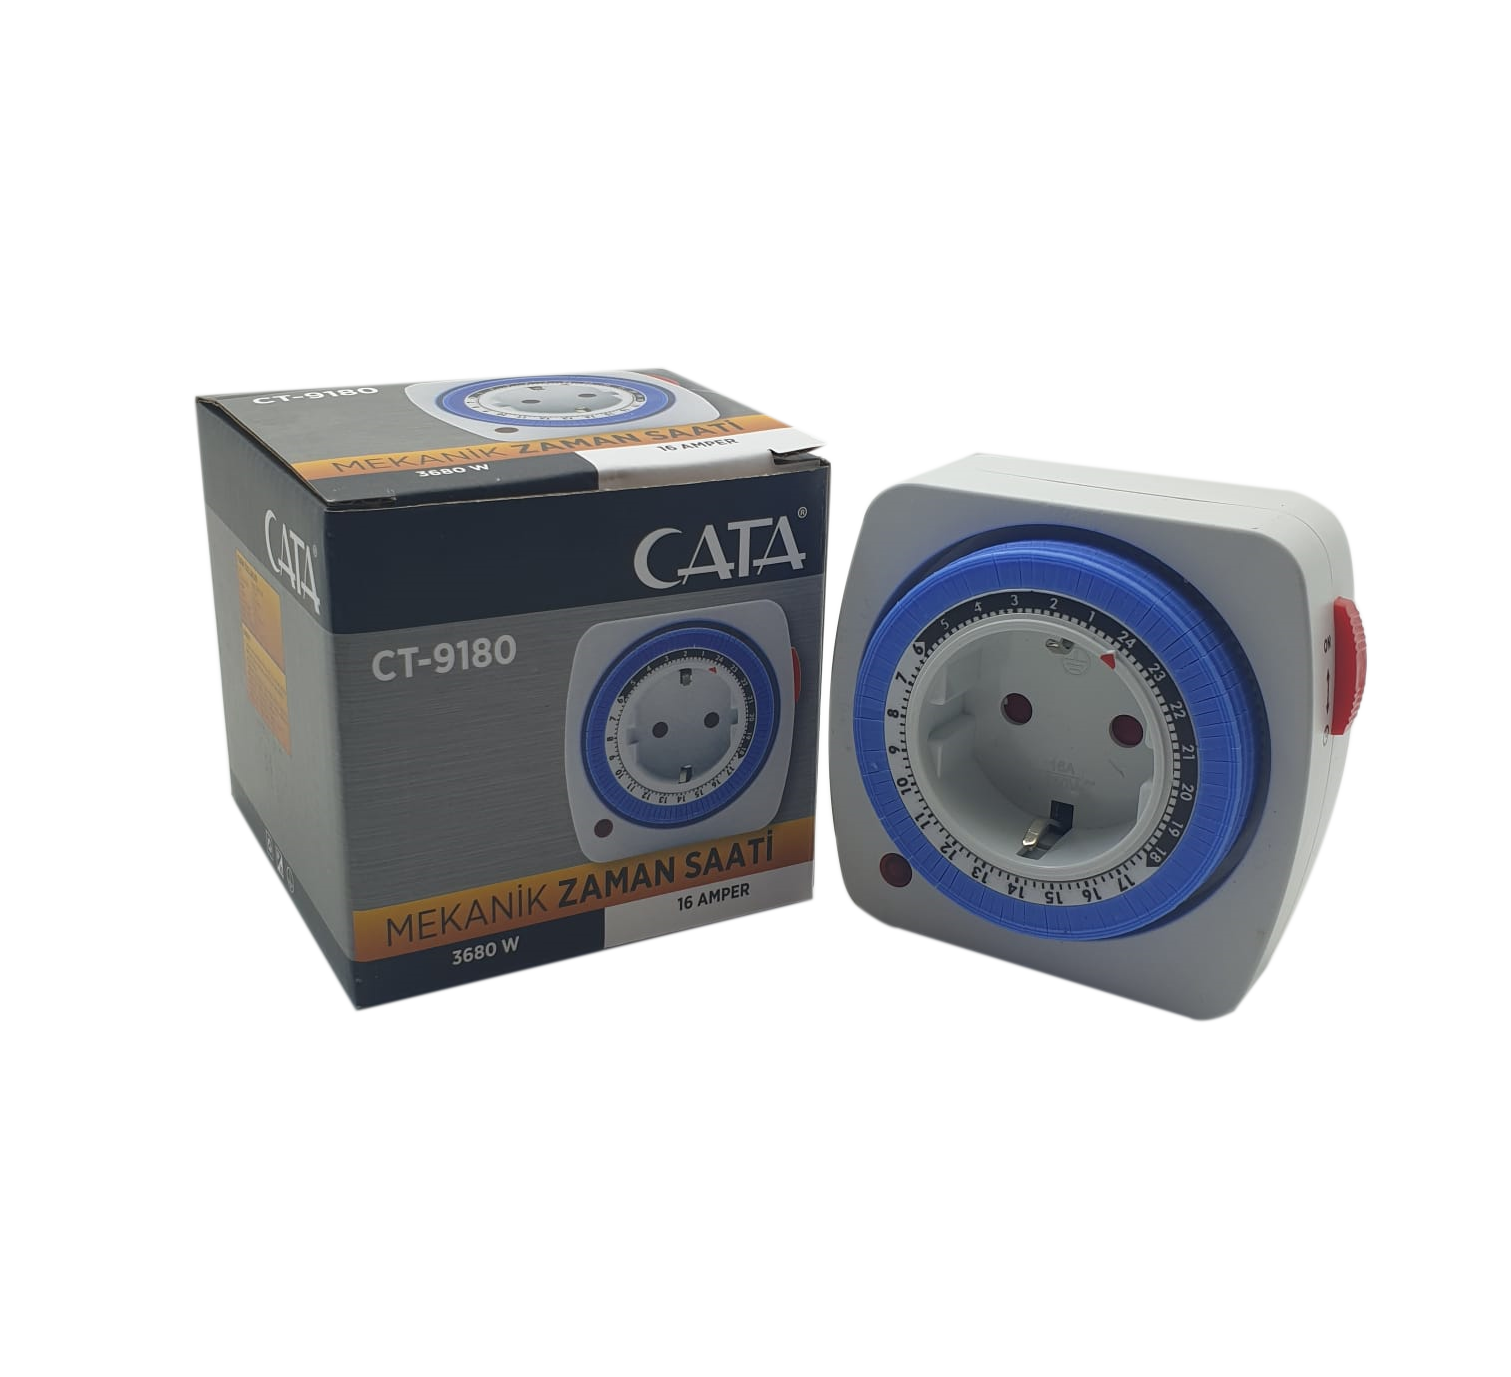 Cata CT-9180 3500w 16A Mekanik Zaman Saati